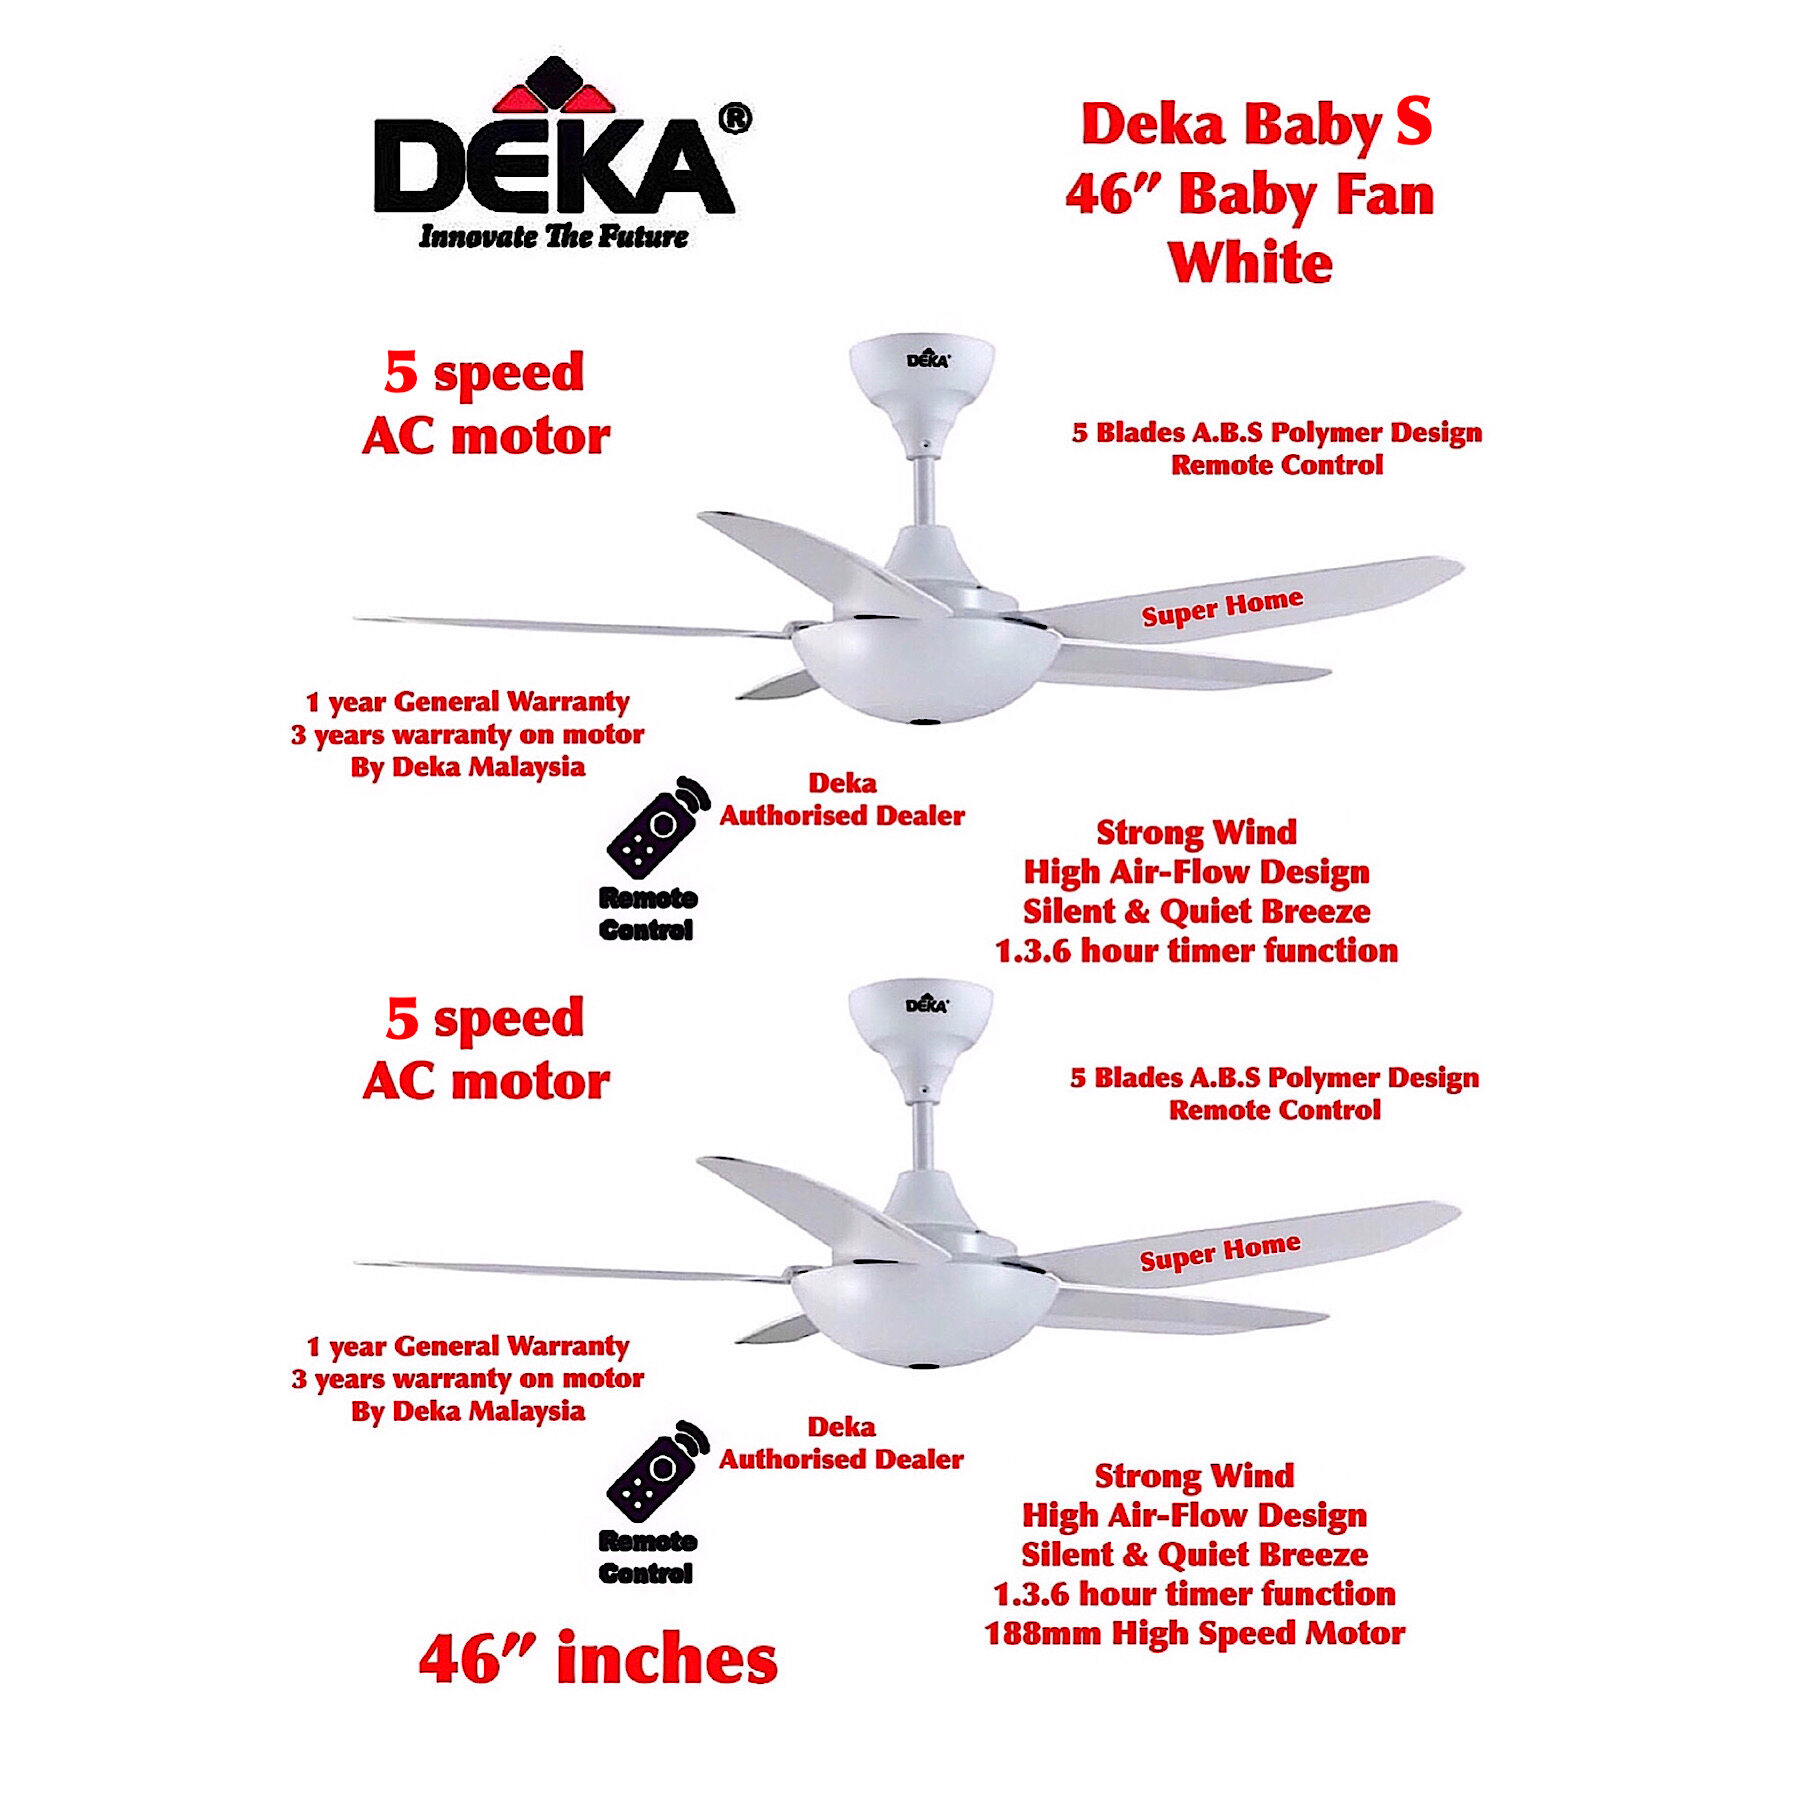 Deka Baby S 46 inch Baby Fan 5 Blades Remote Control Baby Ceiling Fan - White